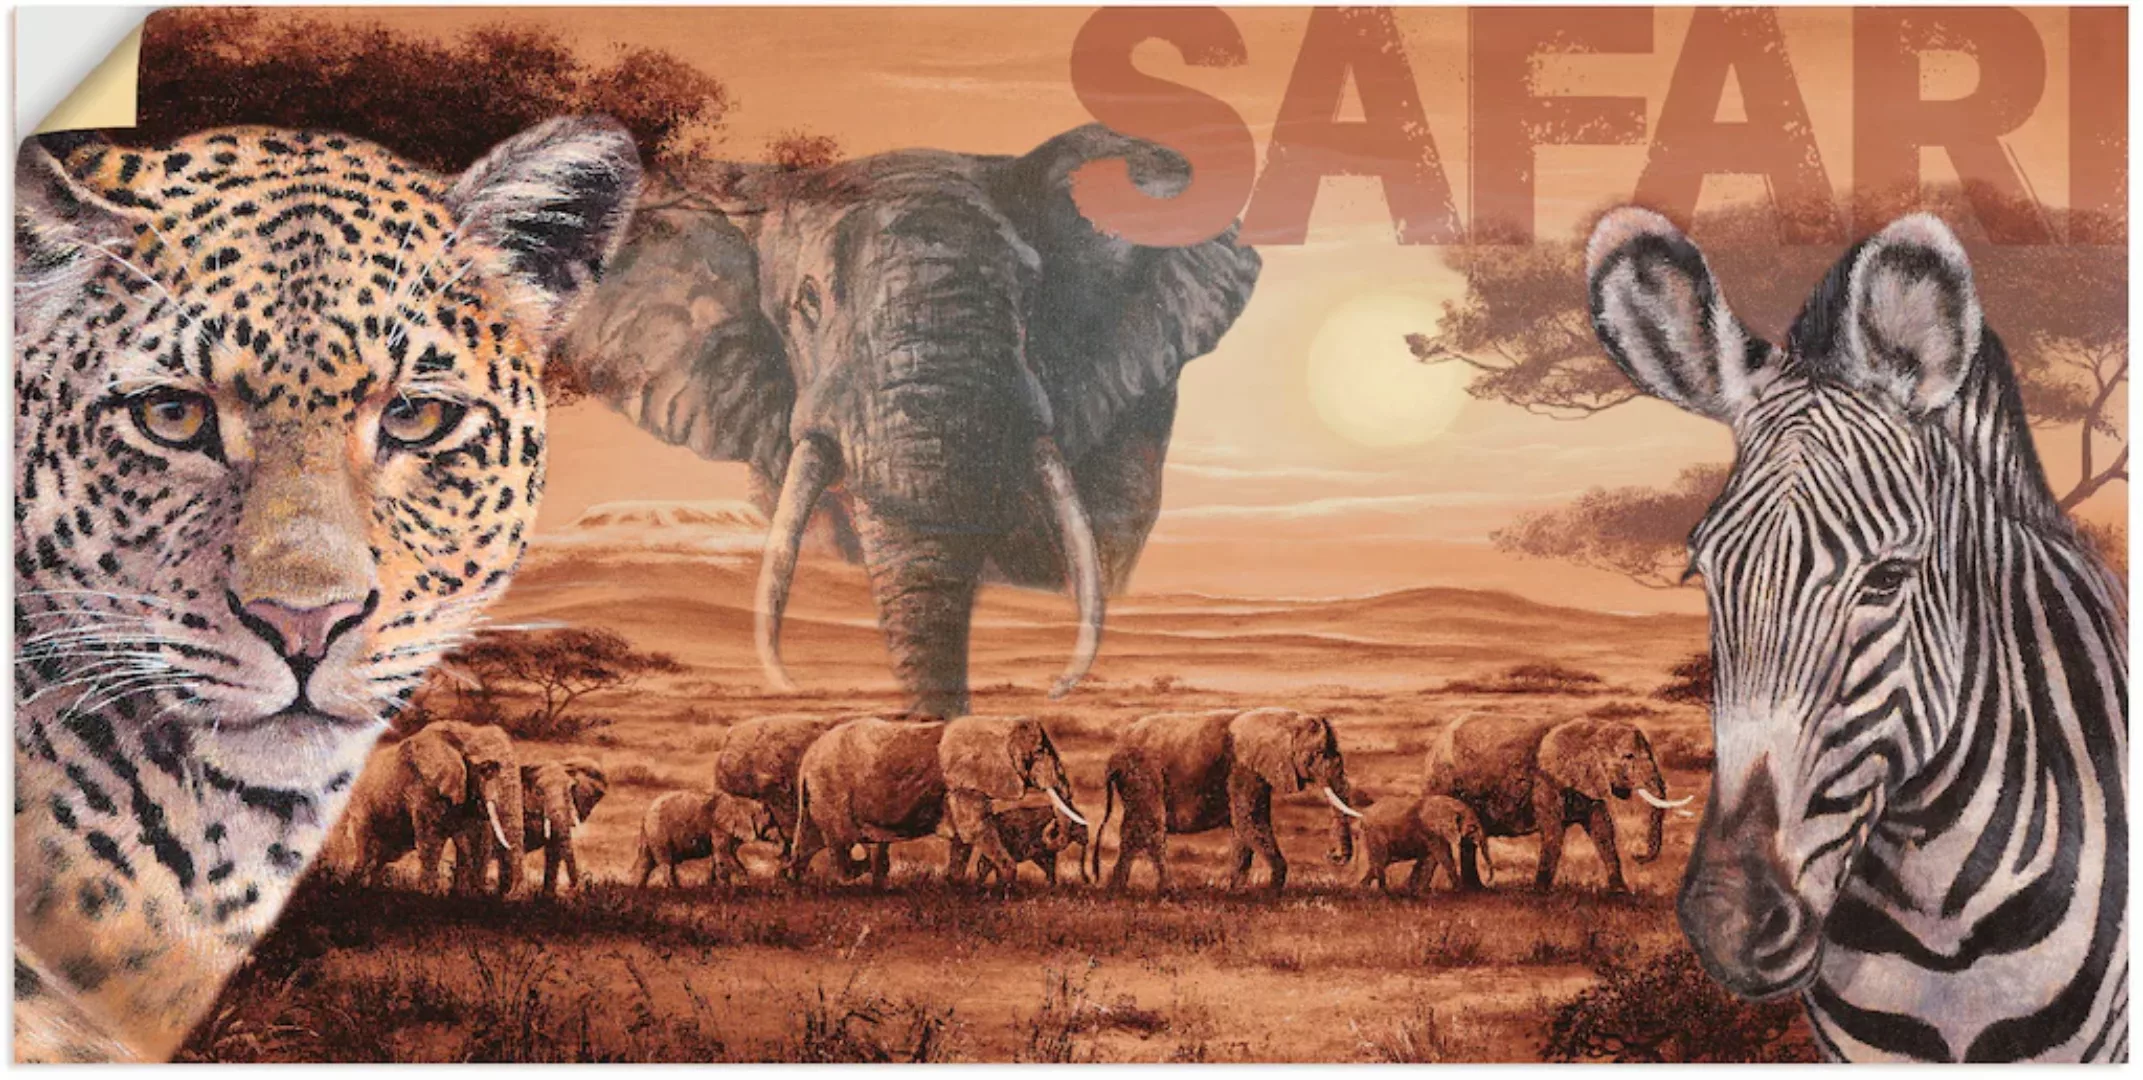 Artland Wandbild "Safari", Wildtiere, (1 St.), als Alubild, Outdoorbild, Le günstig online kaufen